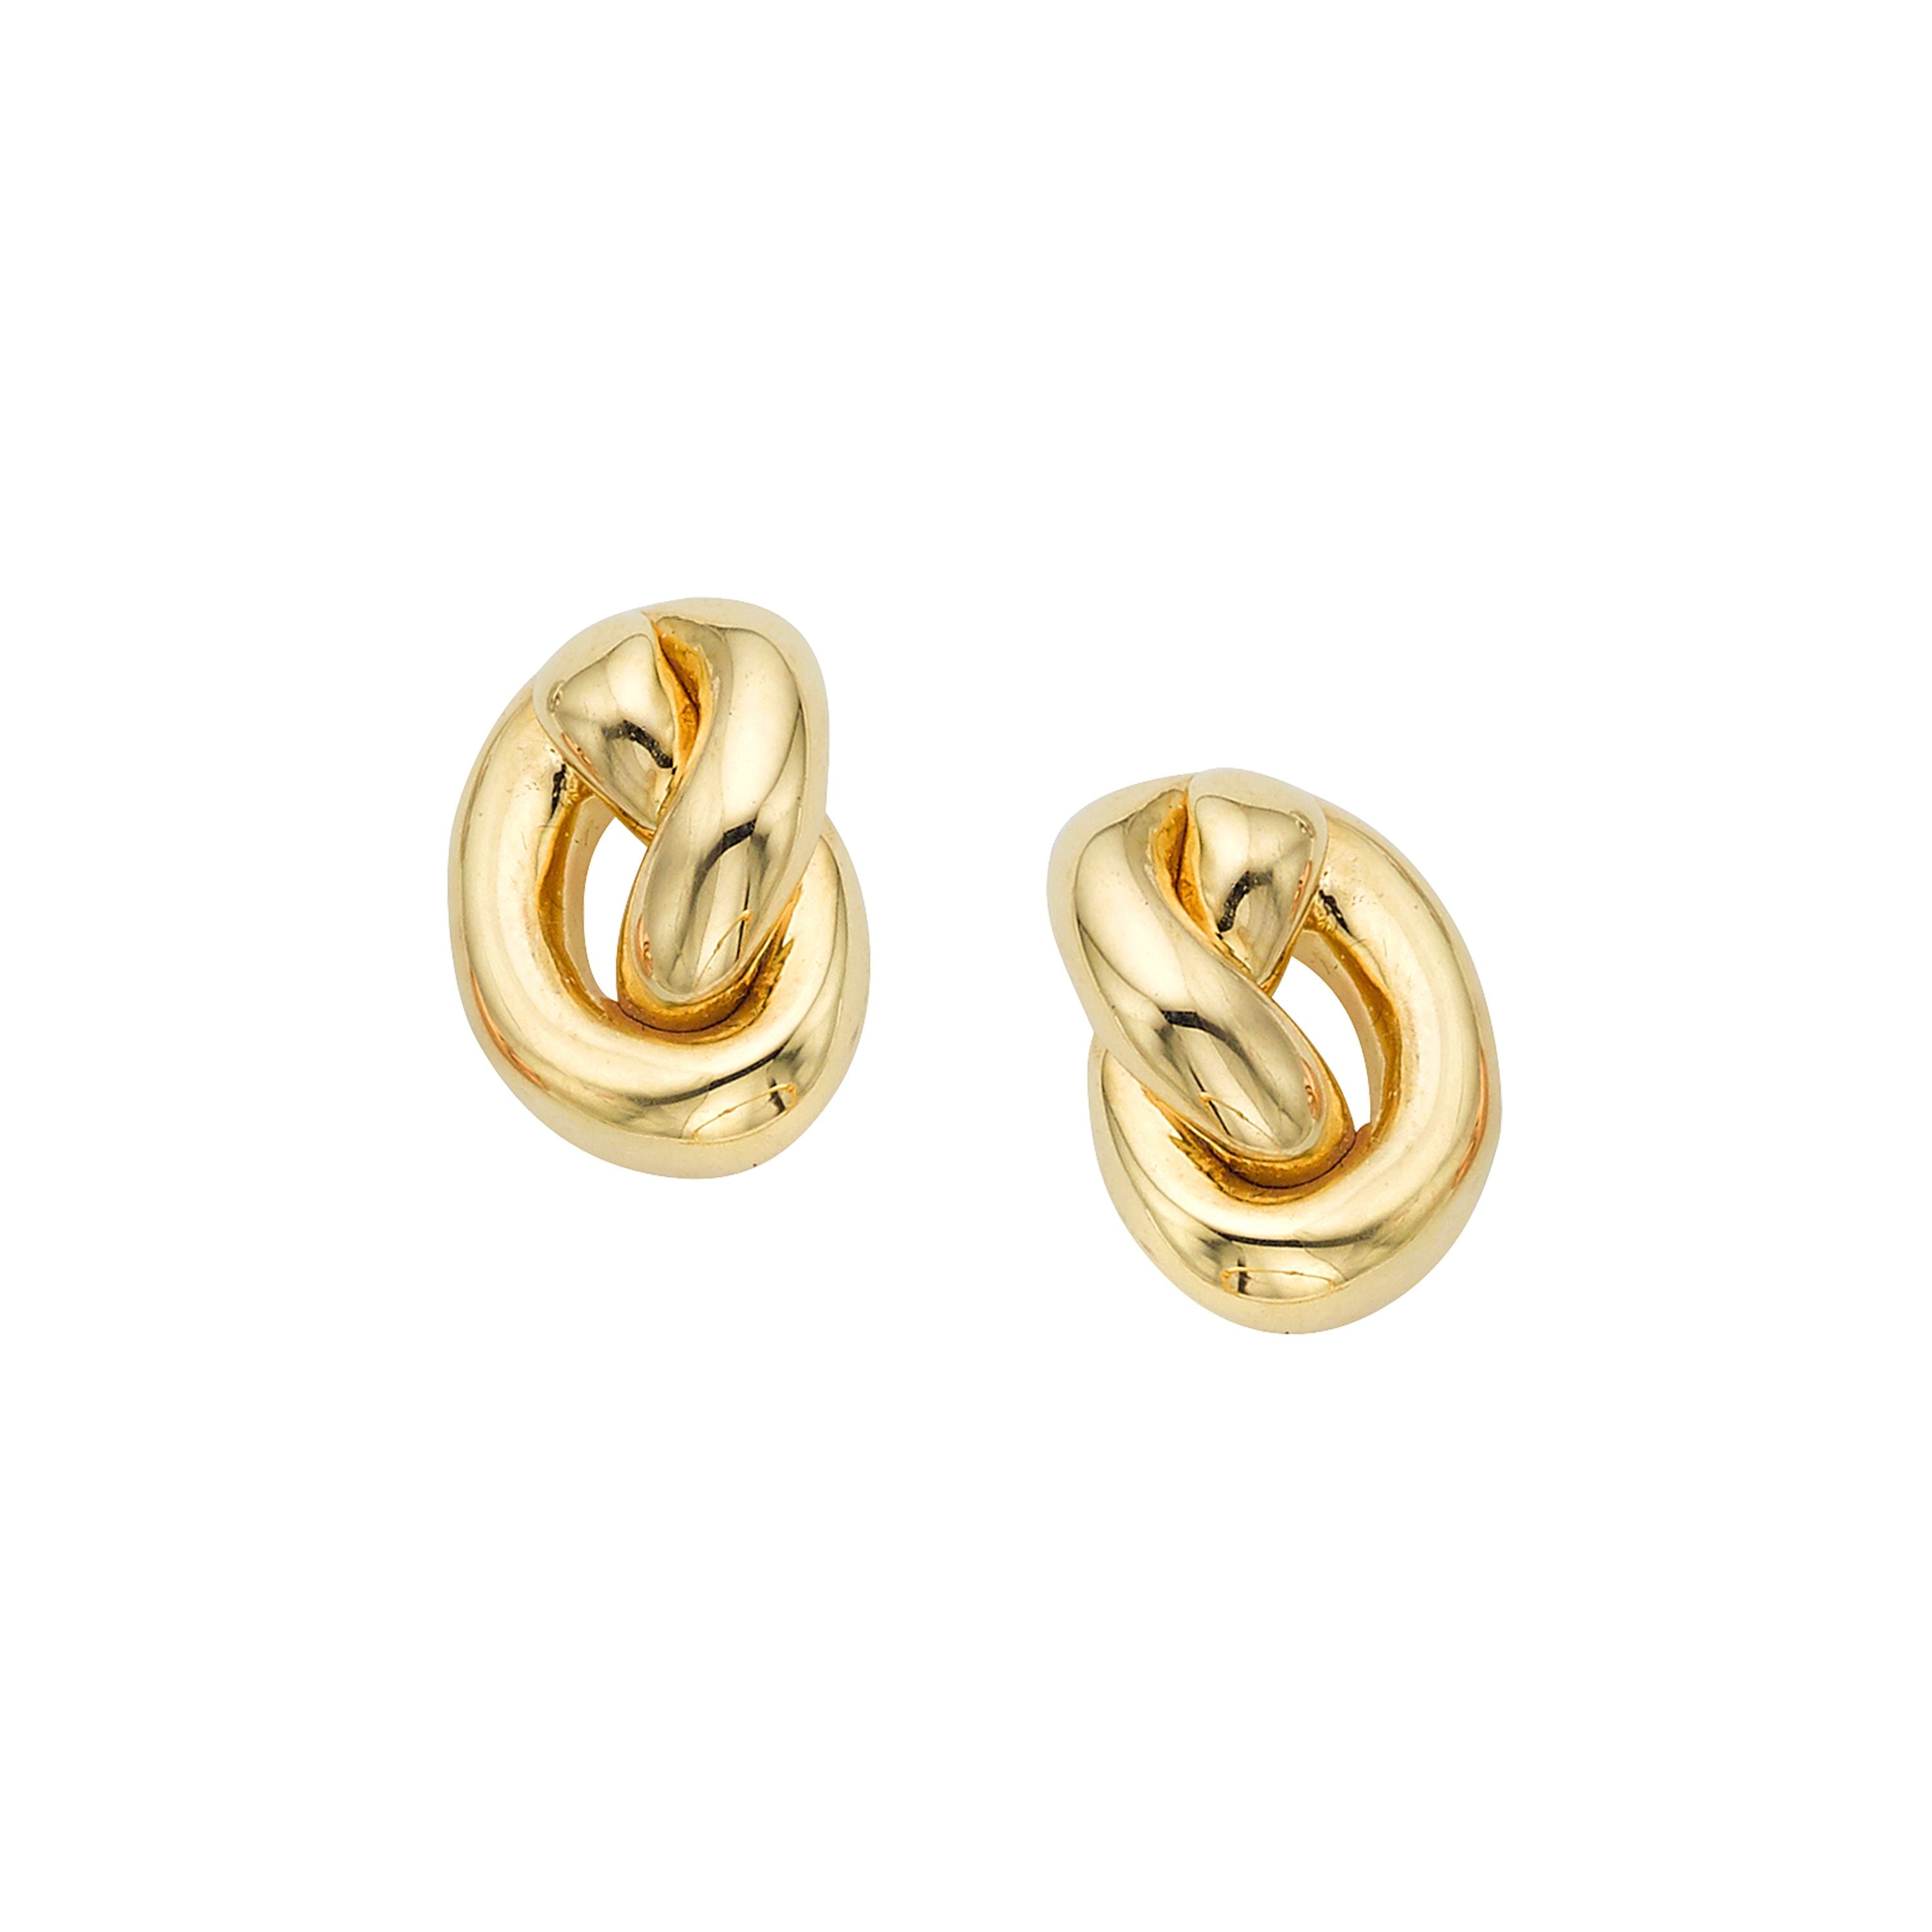 14kt Gold Minimalist Polished Puffed Amore Love Knot Stud Earrings